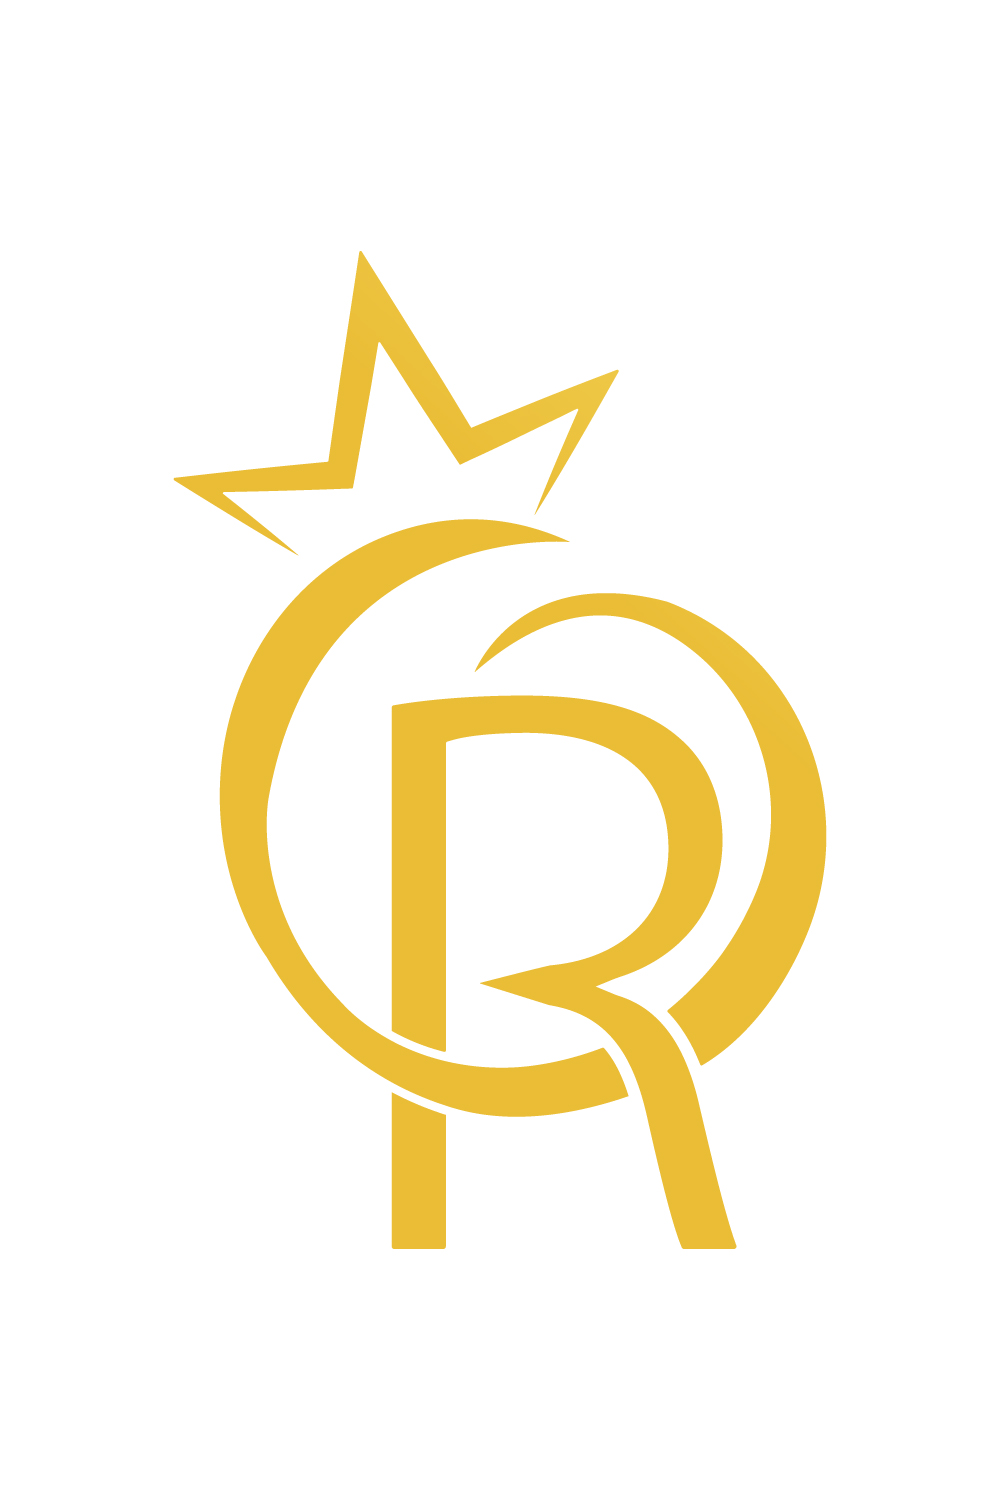 Luxury R crown logo design R letters logo design vector arts R logo golden color icon pinterest preview image.